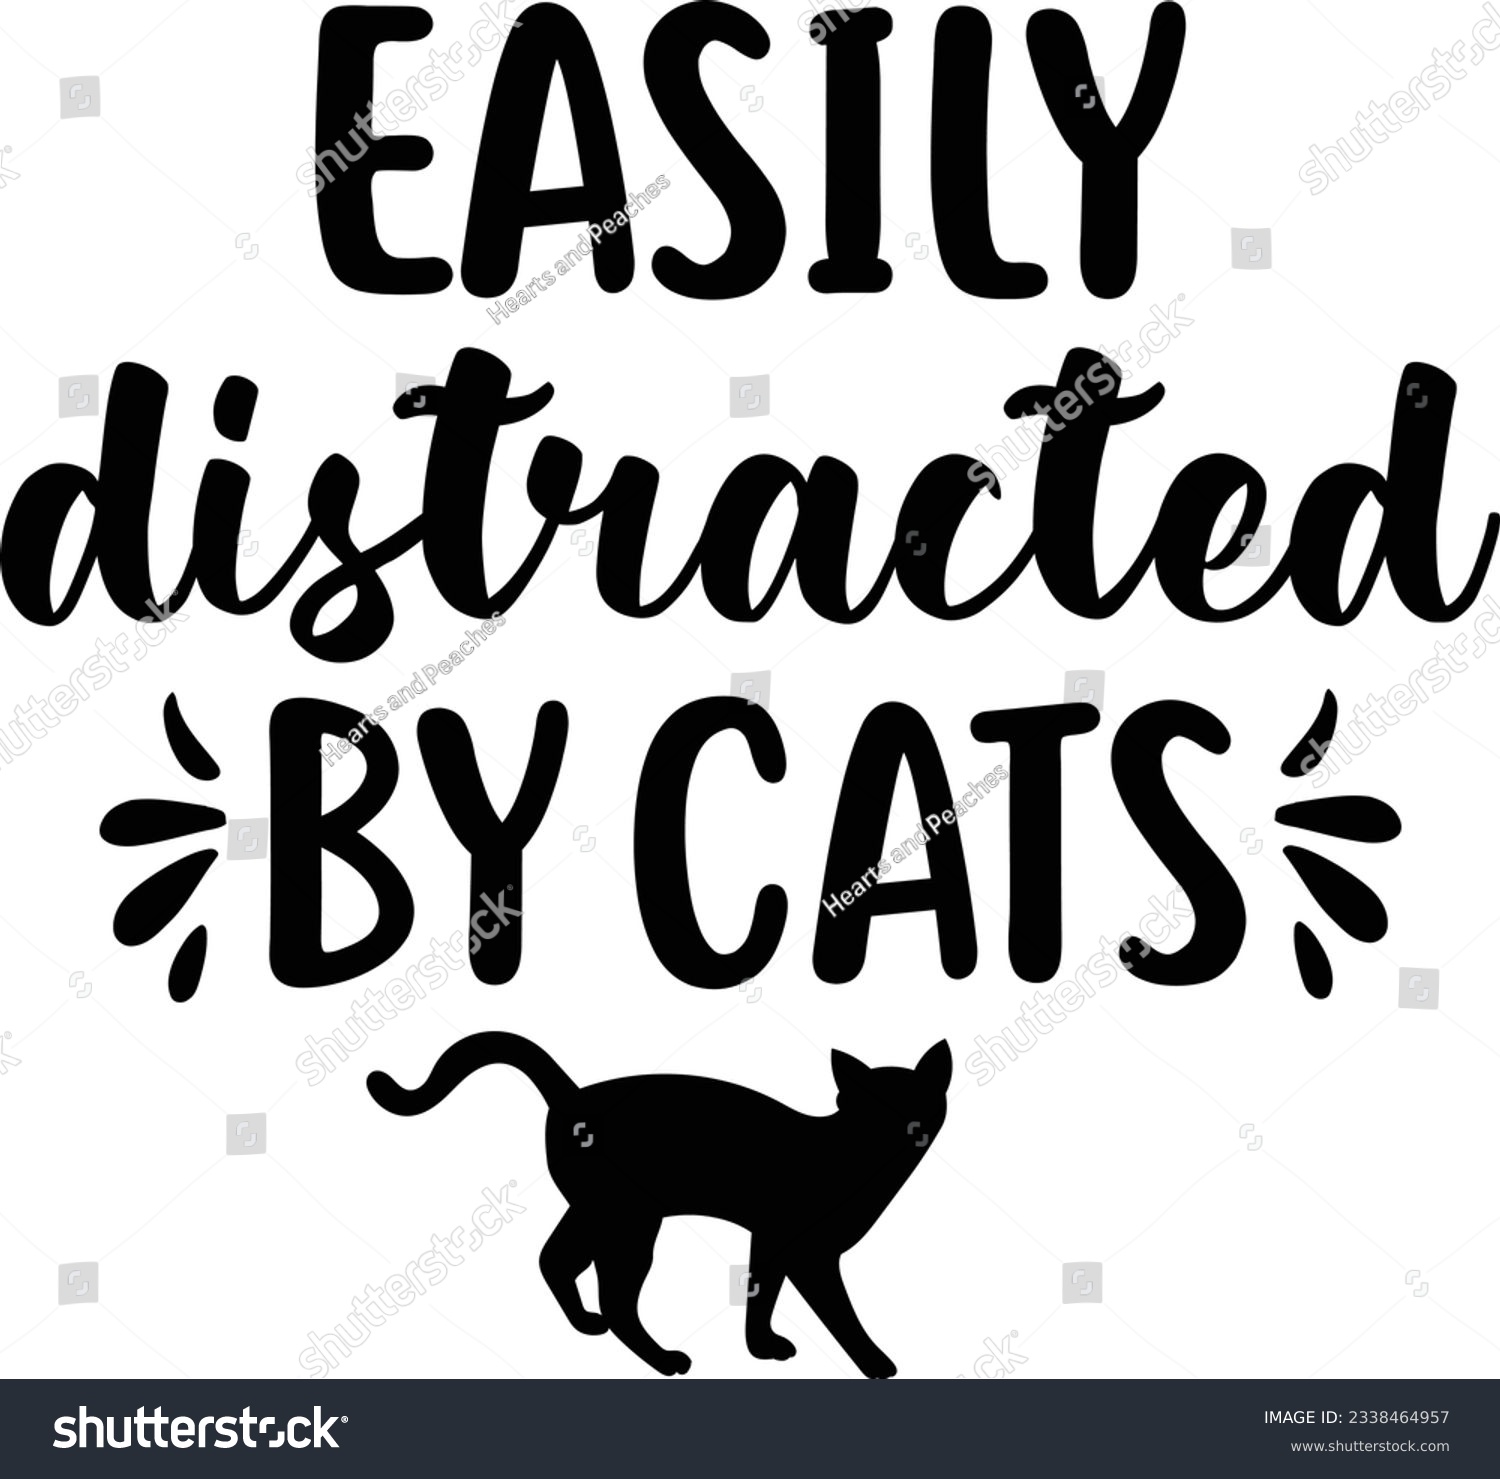 SVG of Easily distracted by cats, Cat SVG Design, SVG File, SVG Cut File, T-shirt design, Tshirt design svg